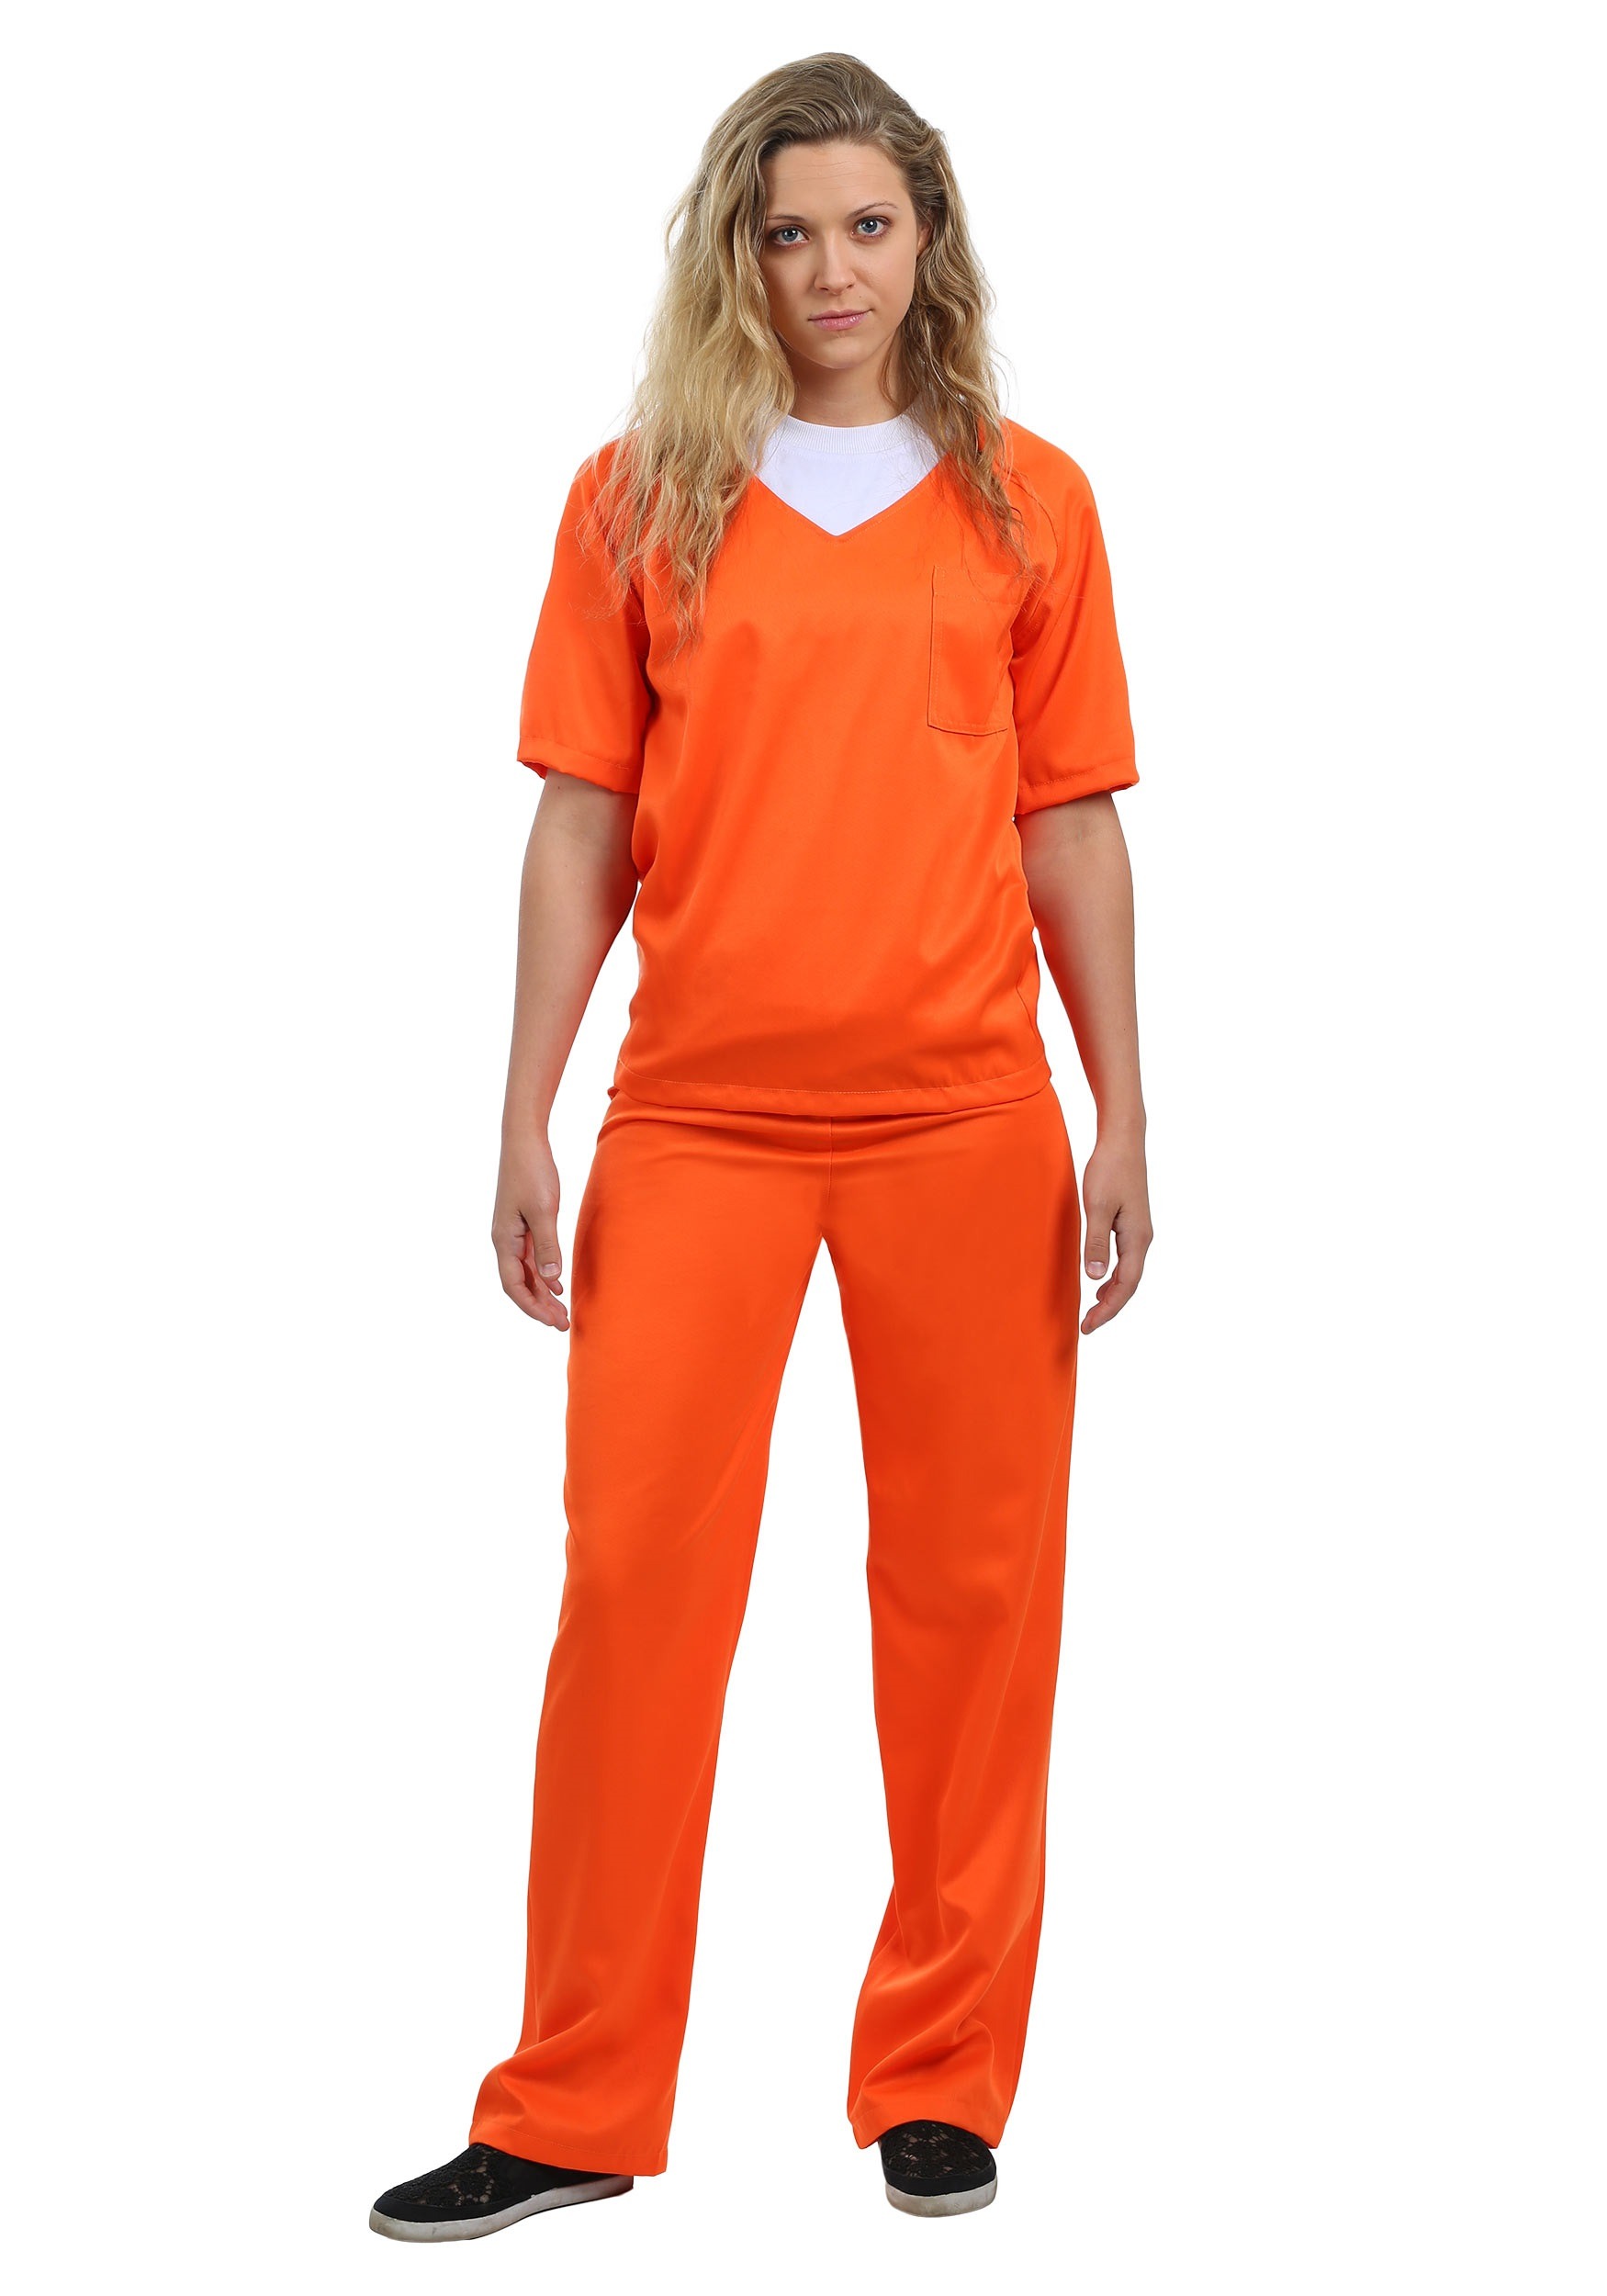 Women’s Orange Prisoner Costume